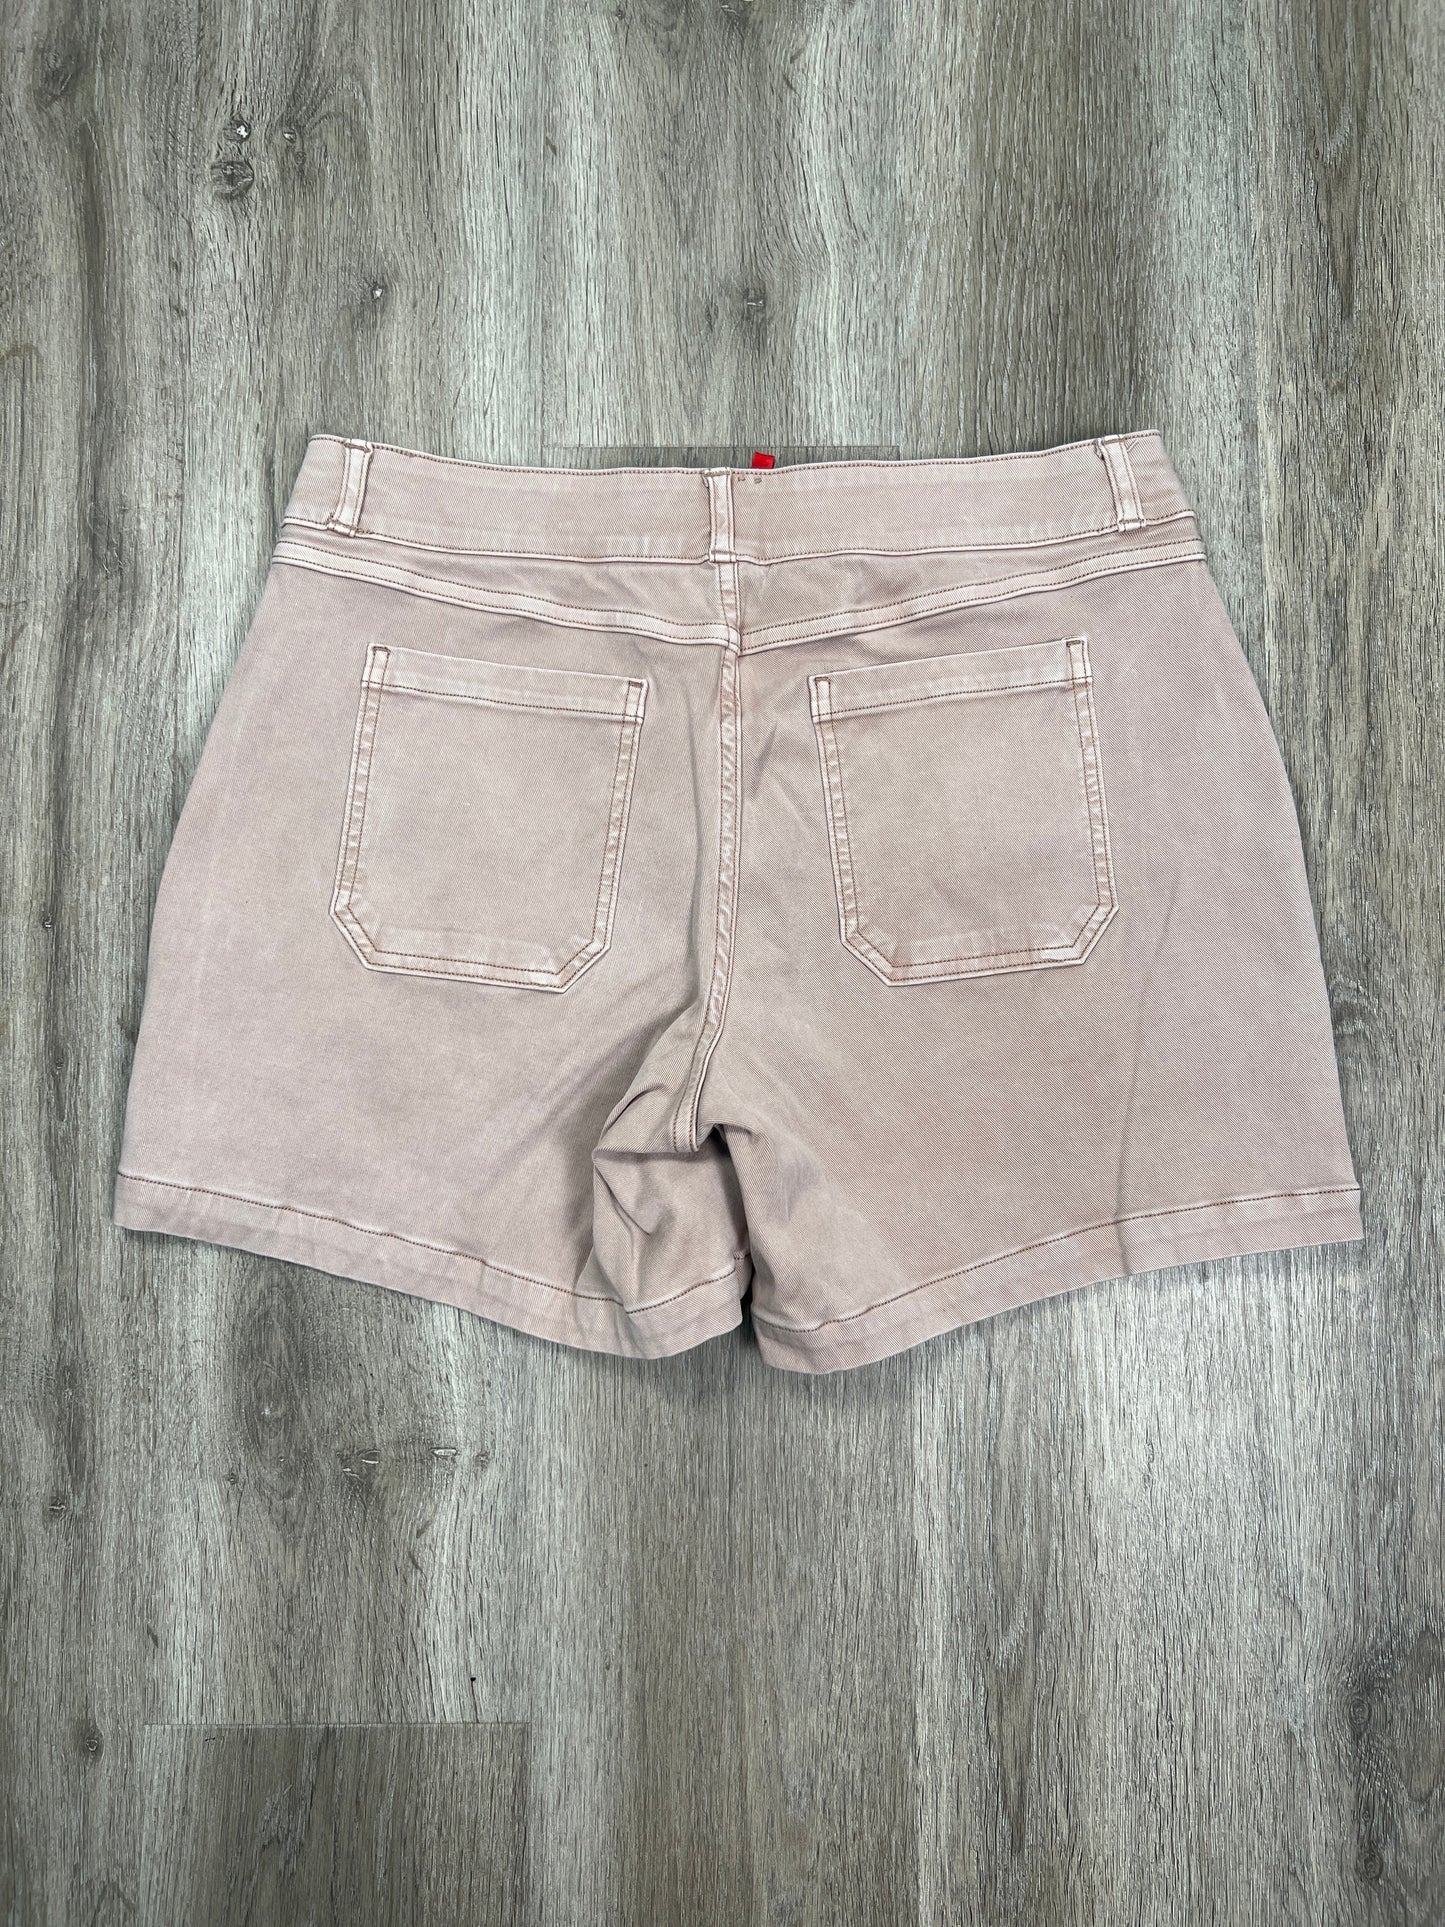 Pink Shorts Spanx, Size Xl